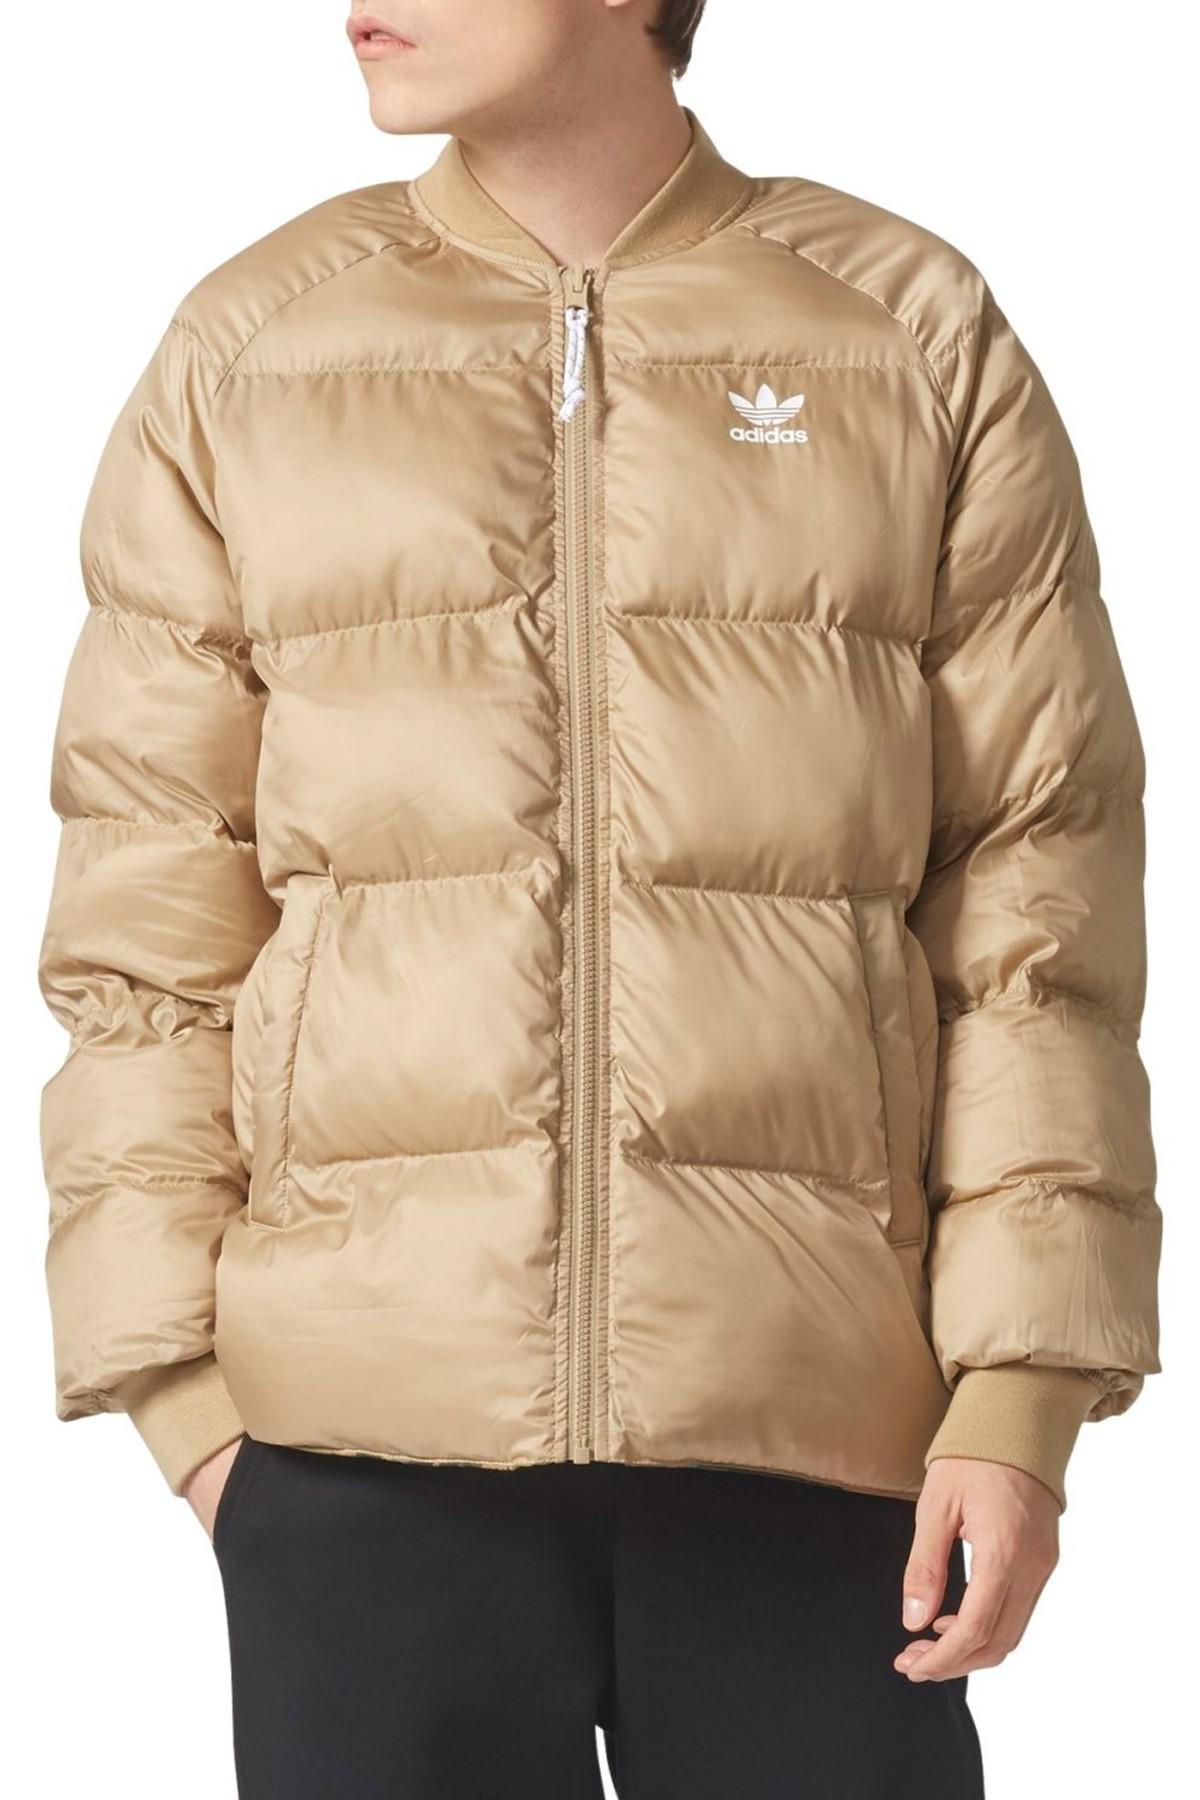 adidas Originals Sst Reversible Winter Jacket for Men - Lyst